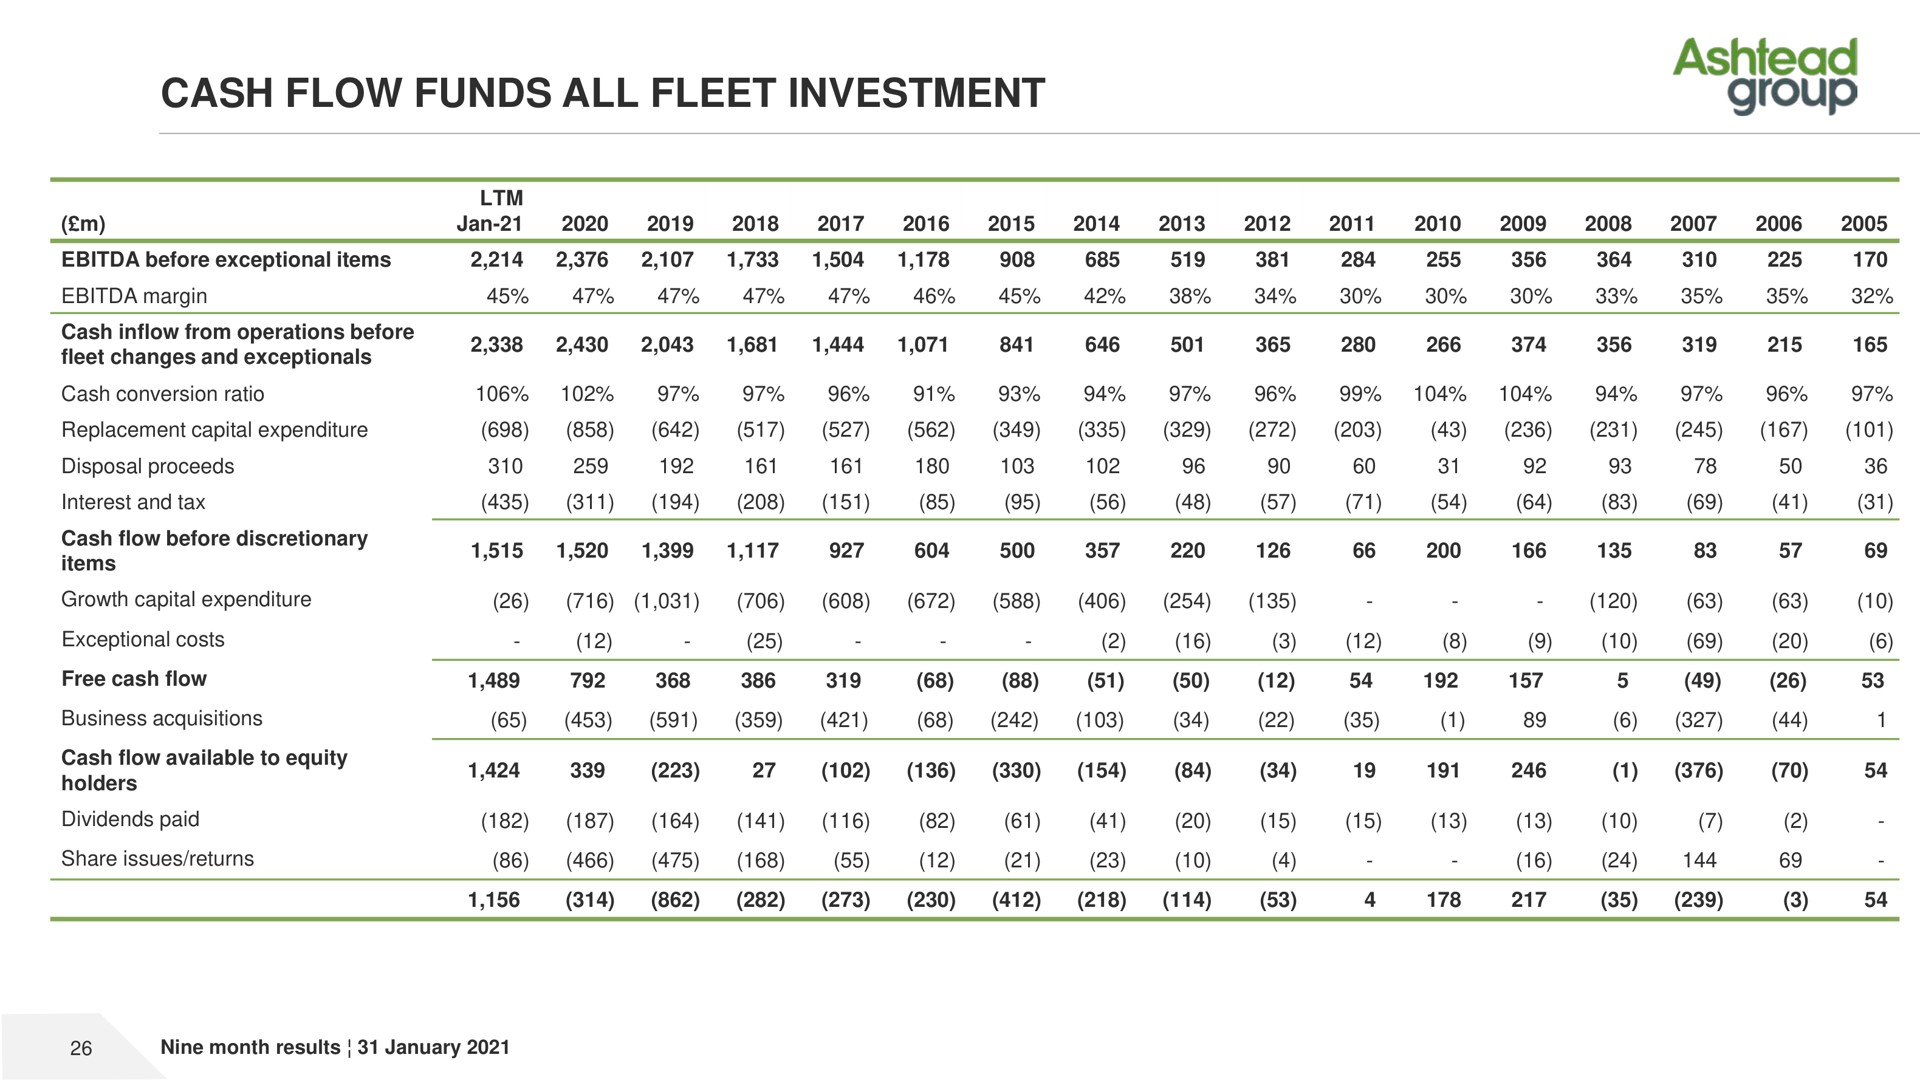 cash flow funds all fleet investment group | Ashtead Group